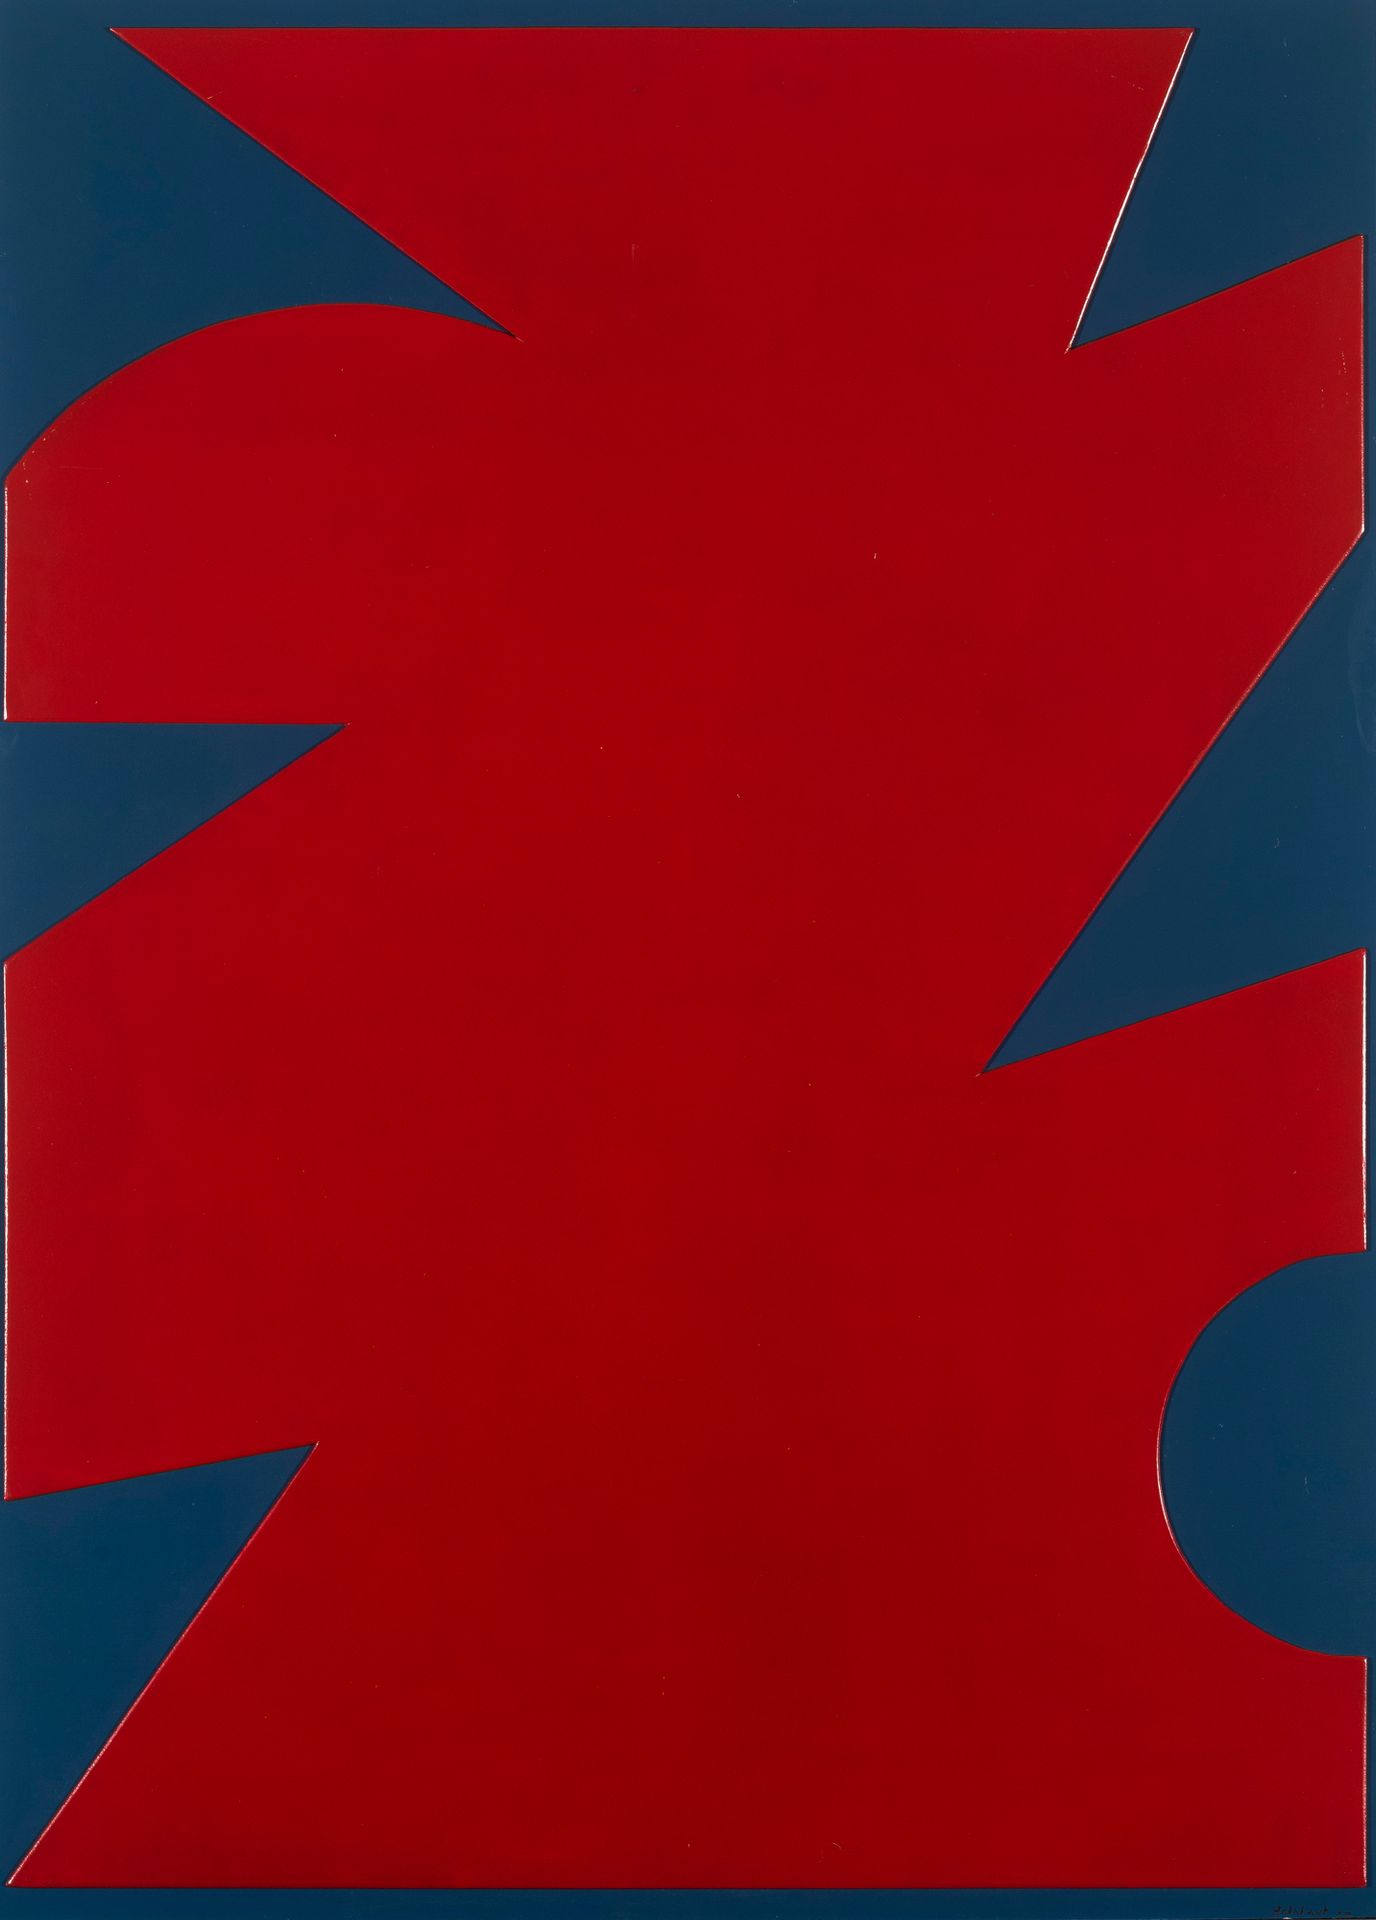 Jo Delahaut (1911-1992) Relation Rouge Bleu n°3, 1967
Óleo sobre tabla en ligero&hellip;